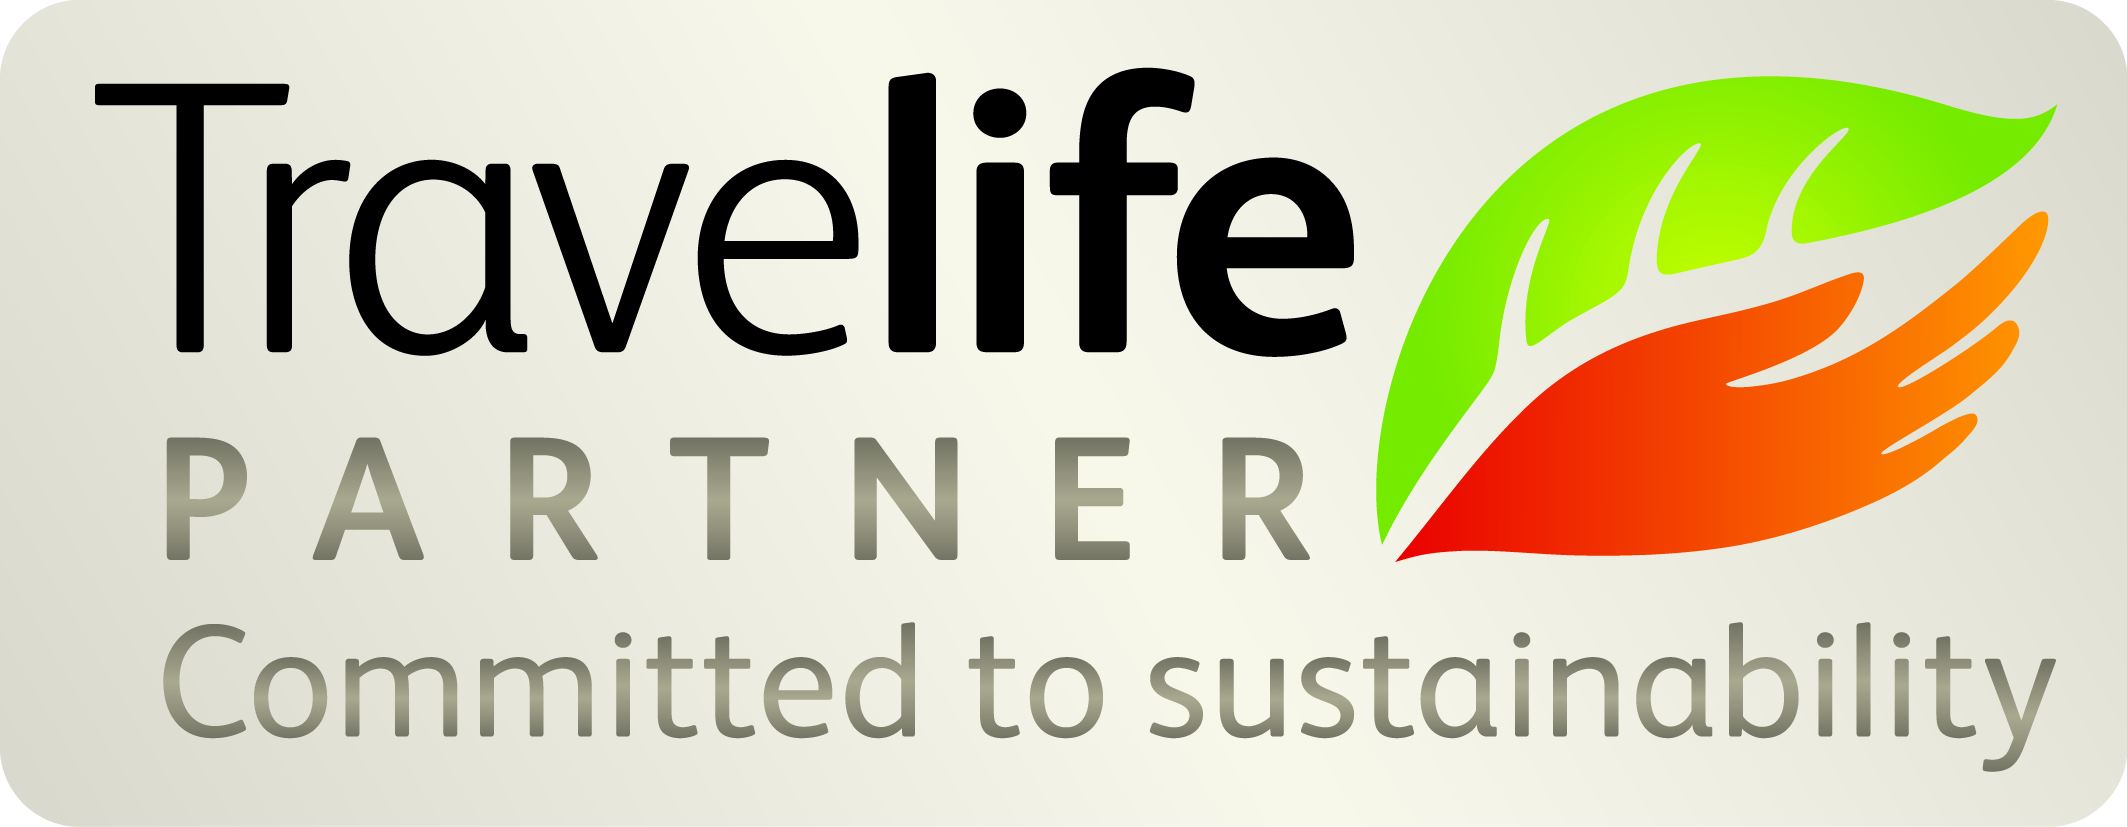 Travelife Sustainabiliy Certification